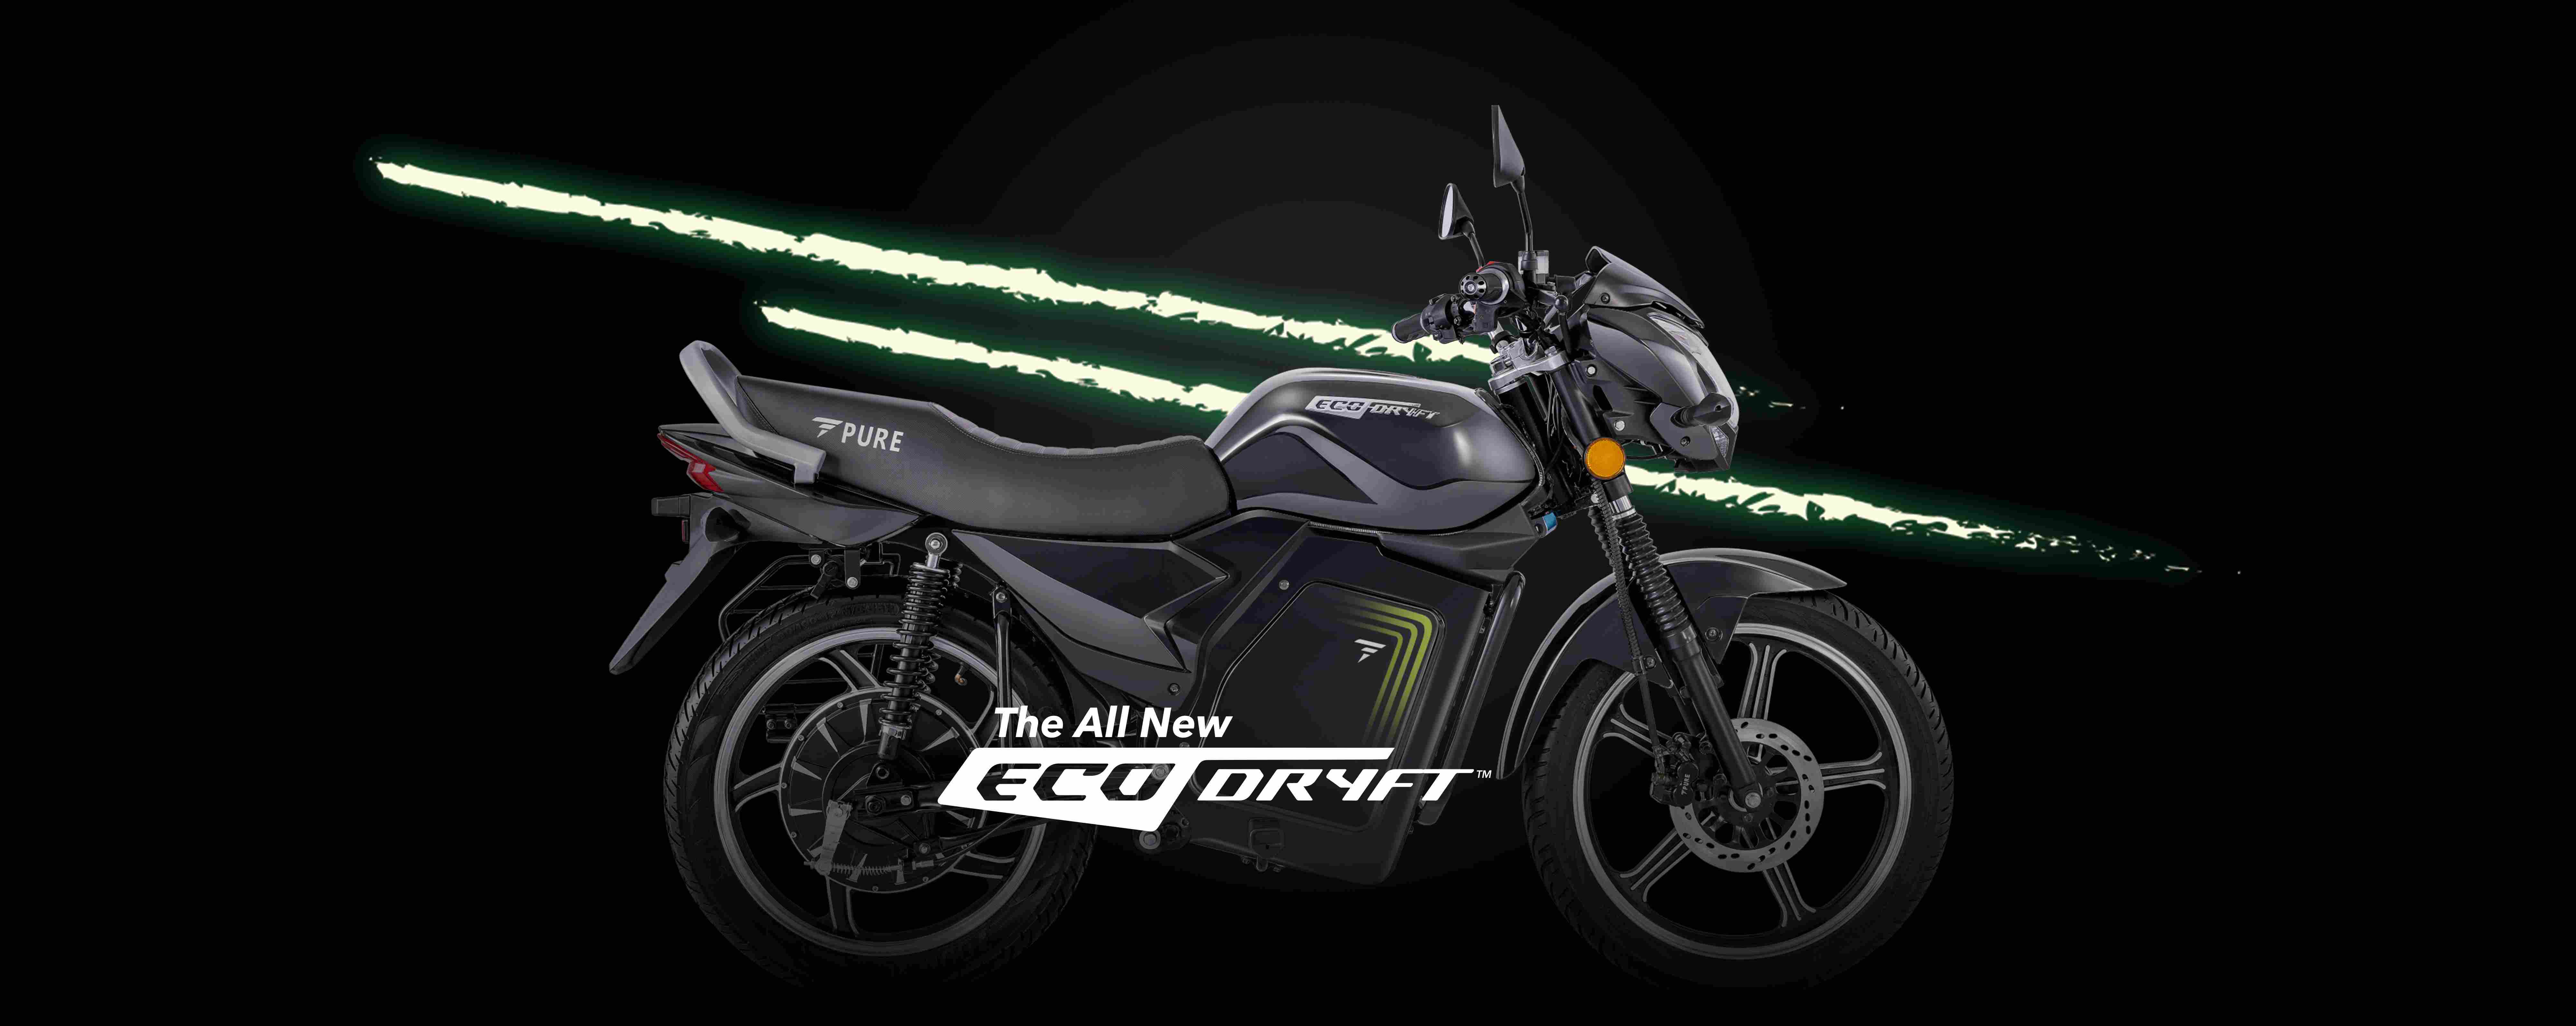 Pure EV ecoDryft - Black